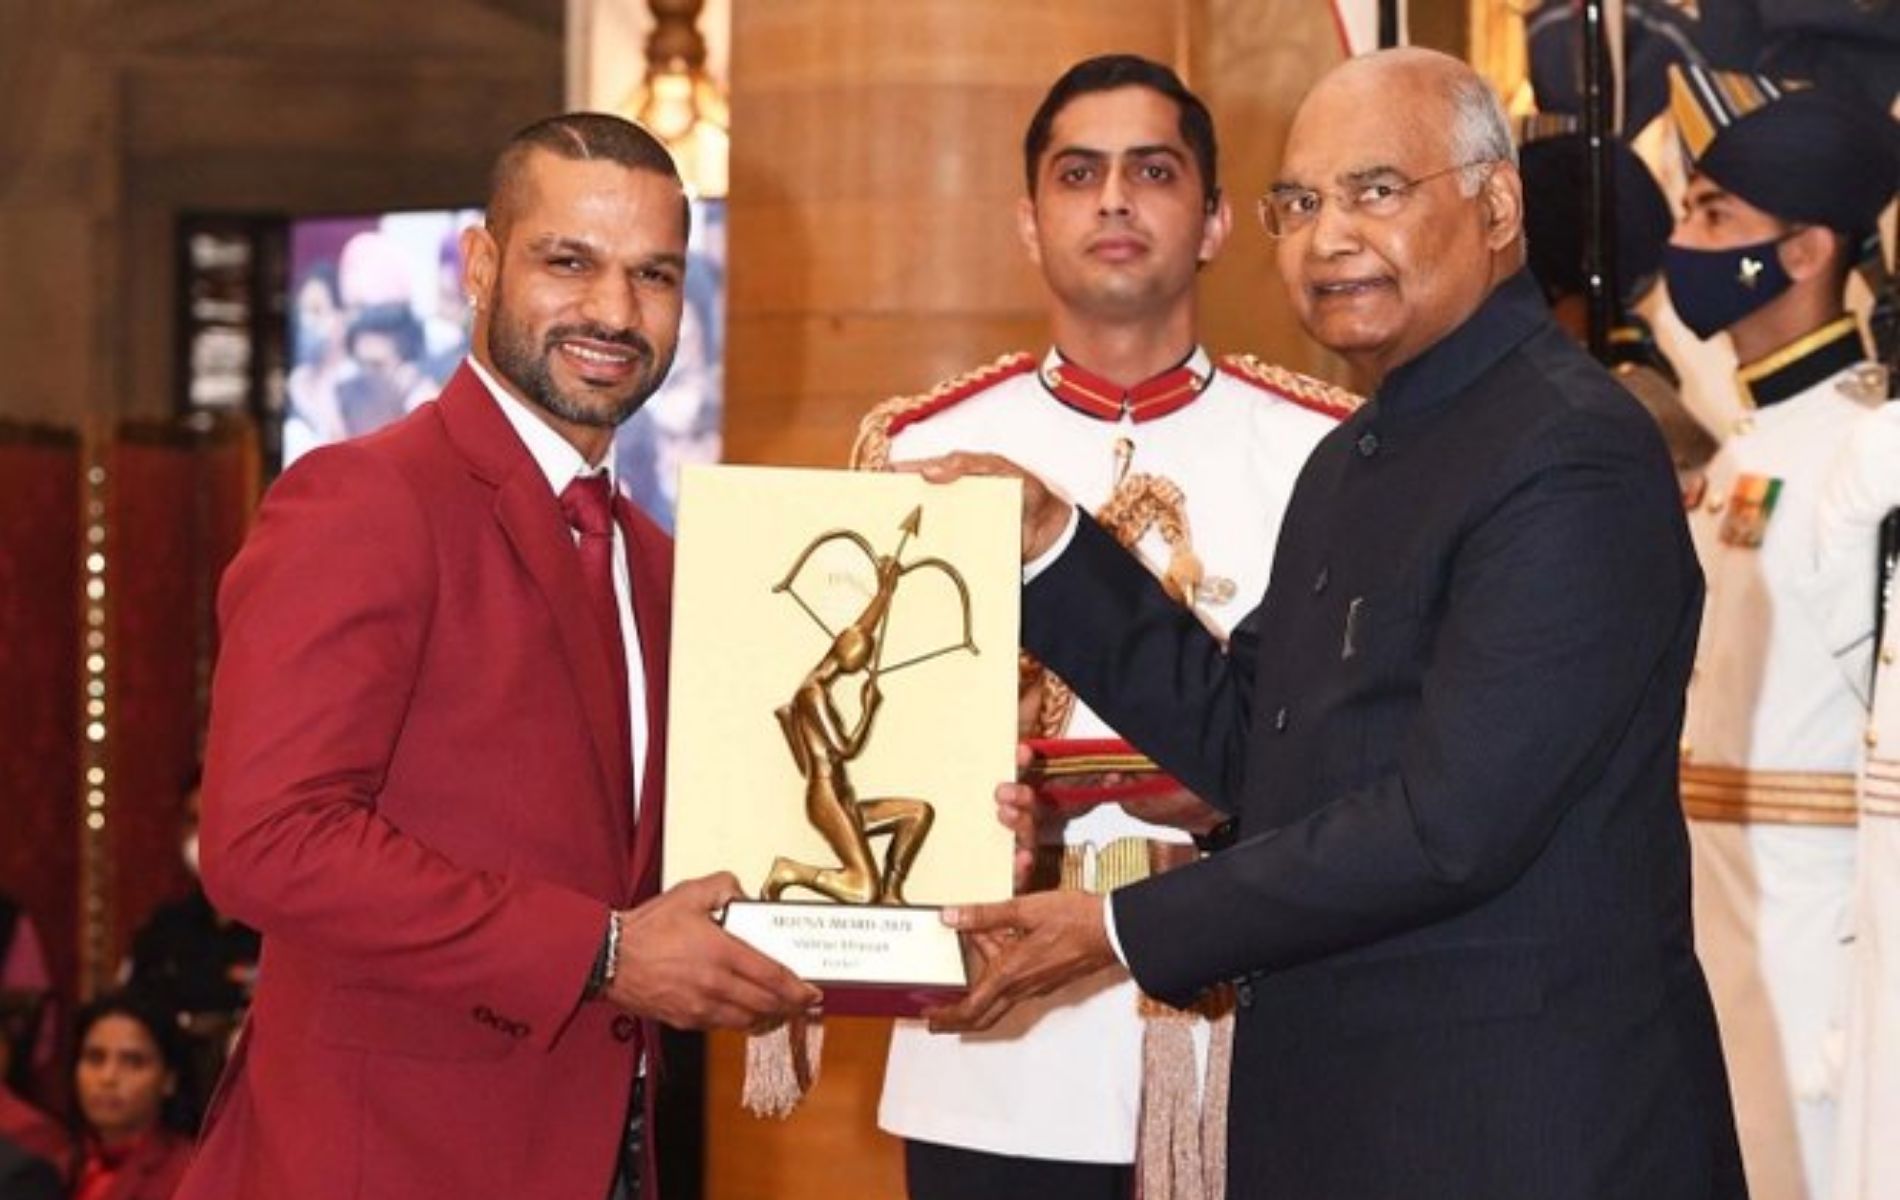 Shikhar Dhawan was conferred with the Arjuna Award on Sunday